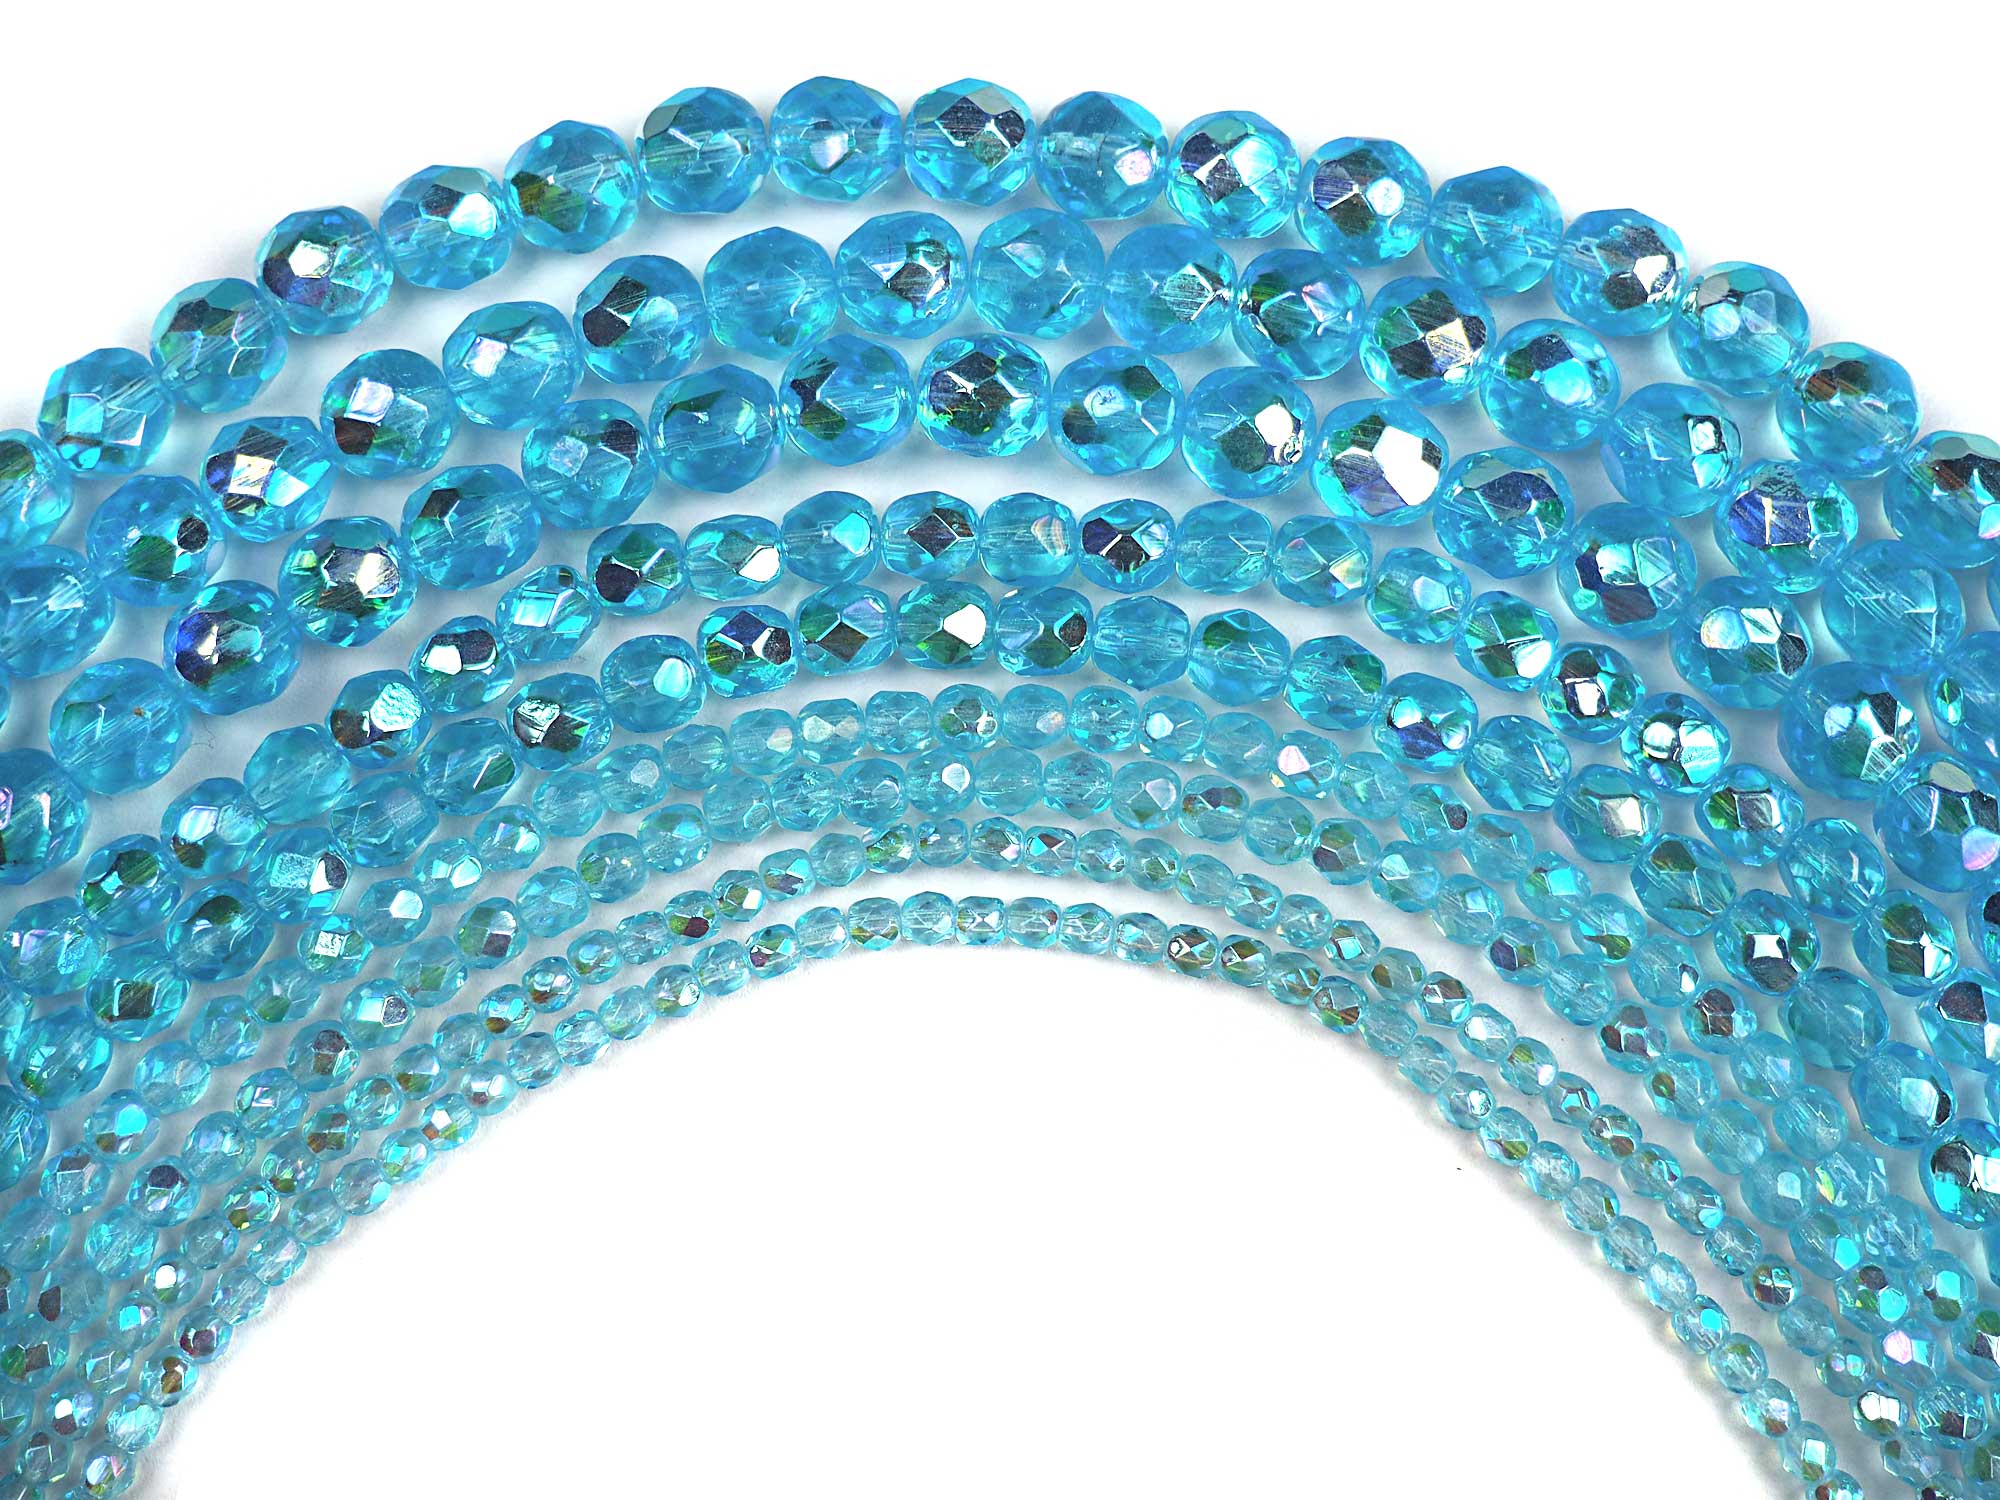 Aqua AB2X fully coated, Czech Fire Polished Round Faceted Glass Beads, 16 inch strand, Aquamarine double coated with Aurora Borealis